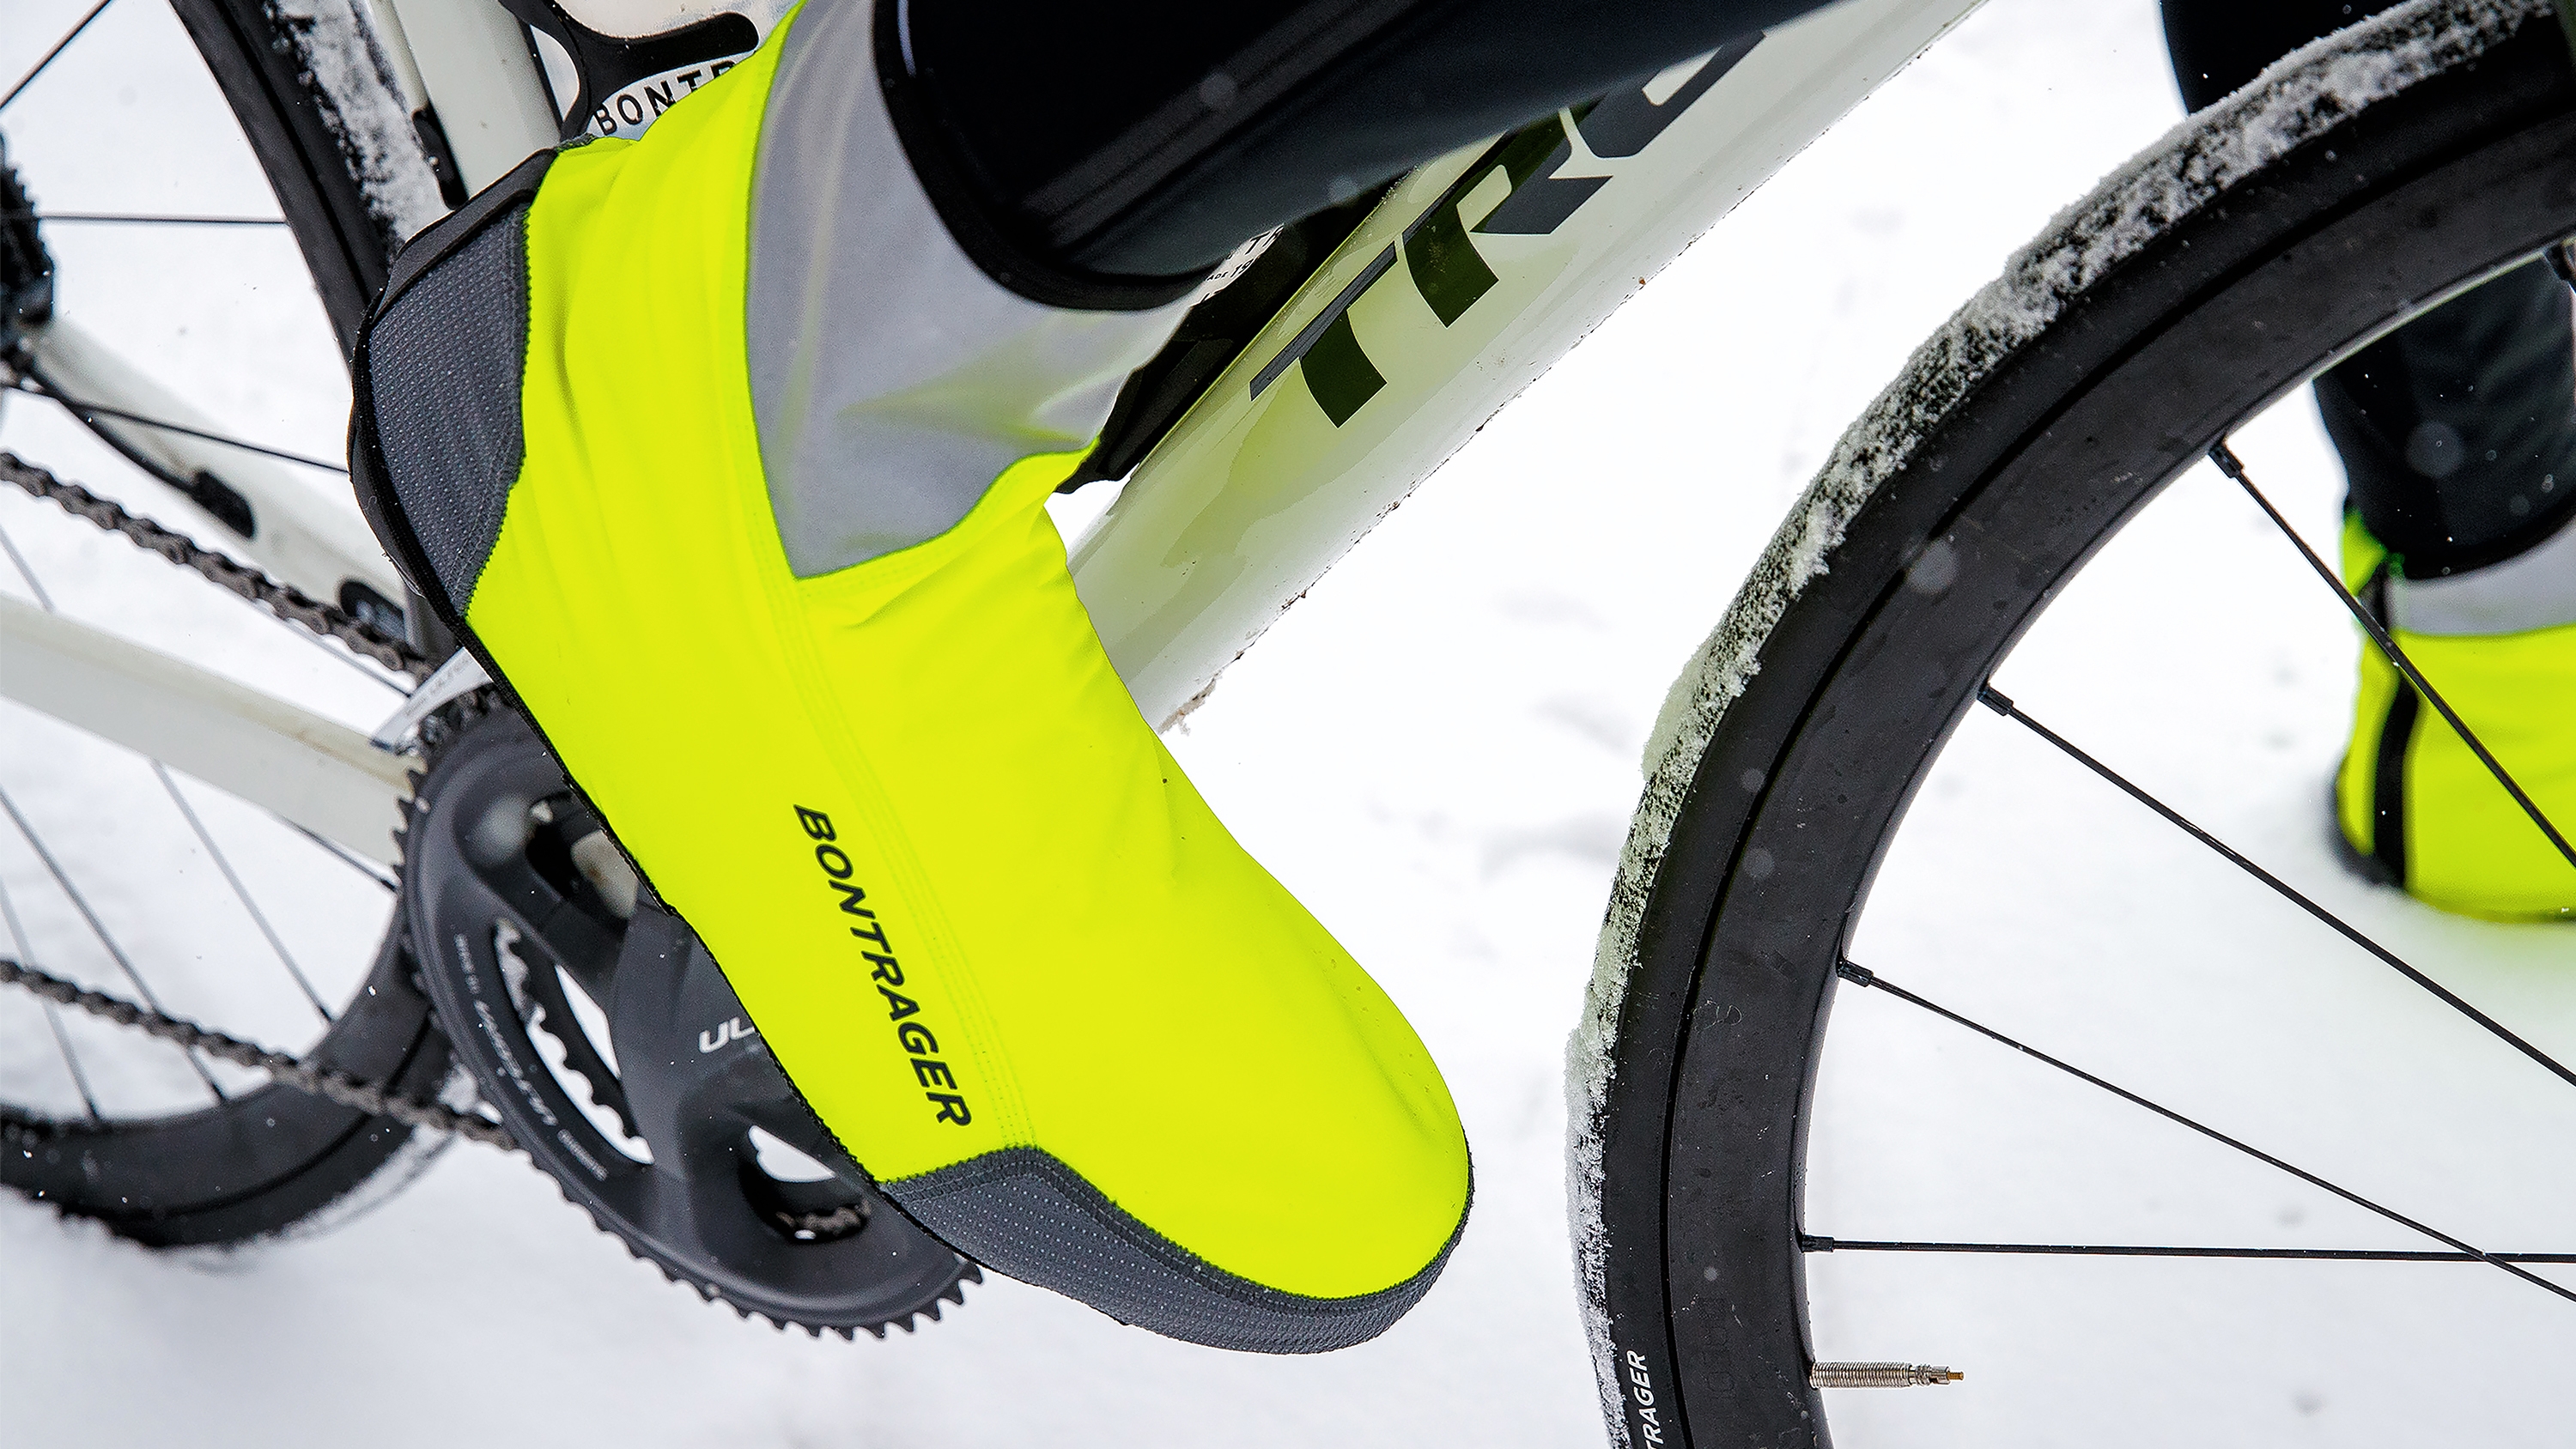 waterproof bike shoe covers